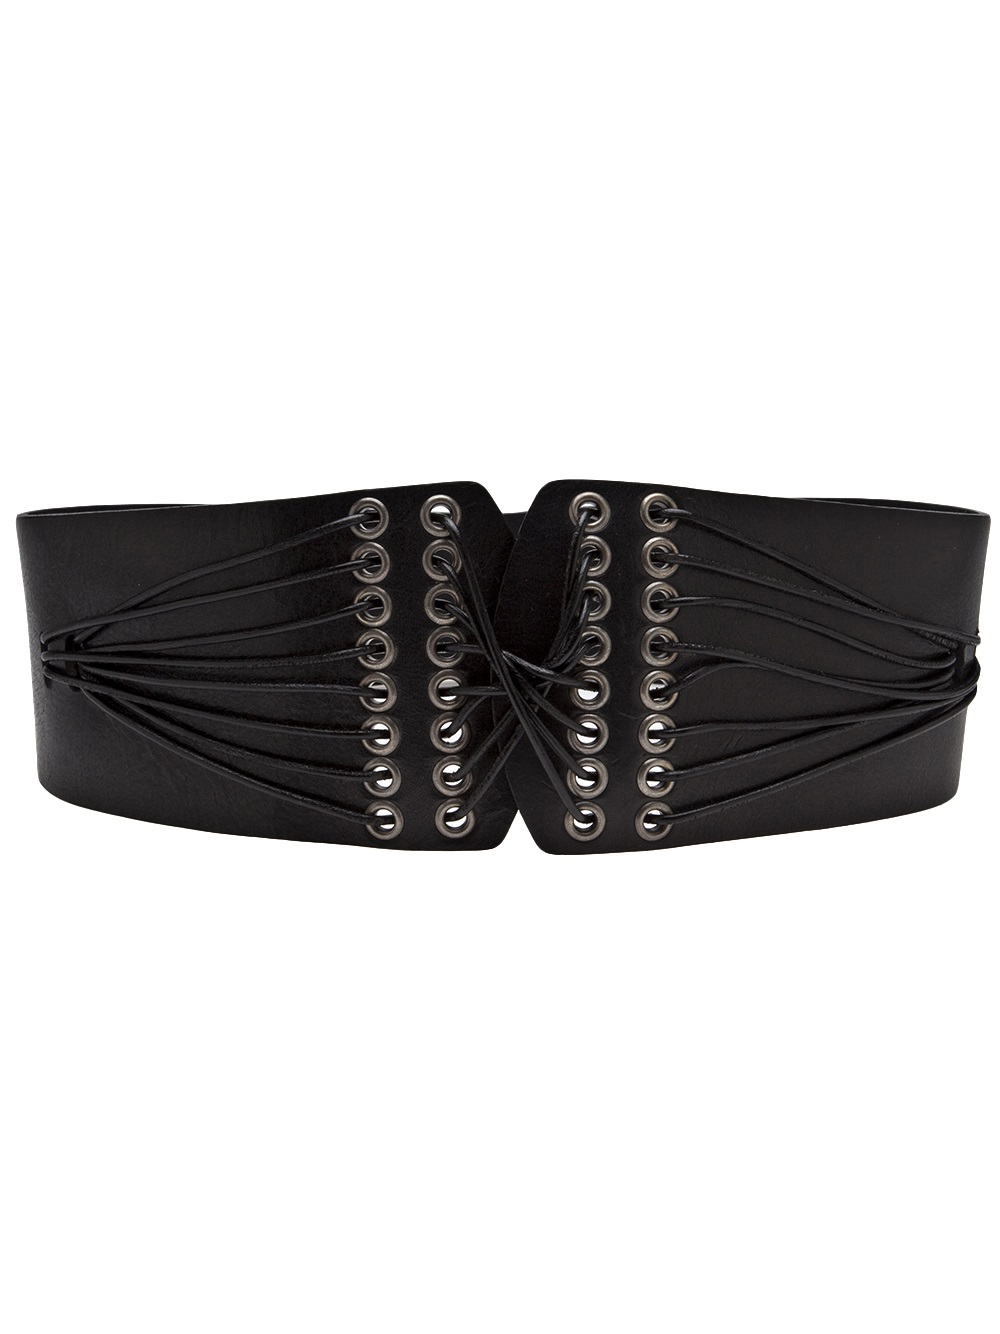 Lyst - Plein Sud Thick Leather Belt in Black